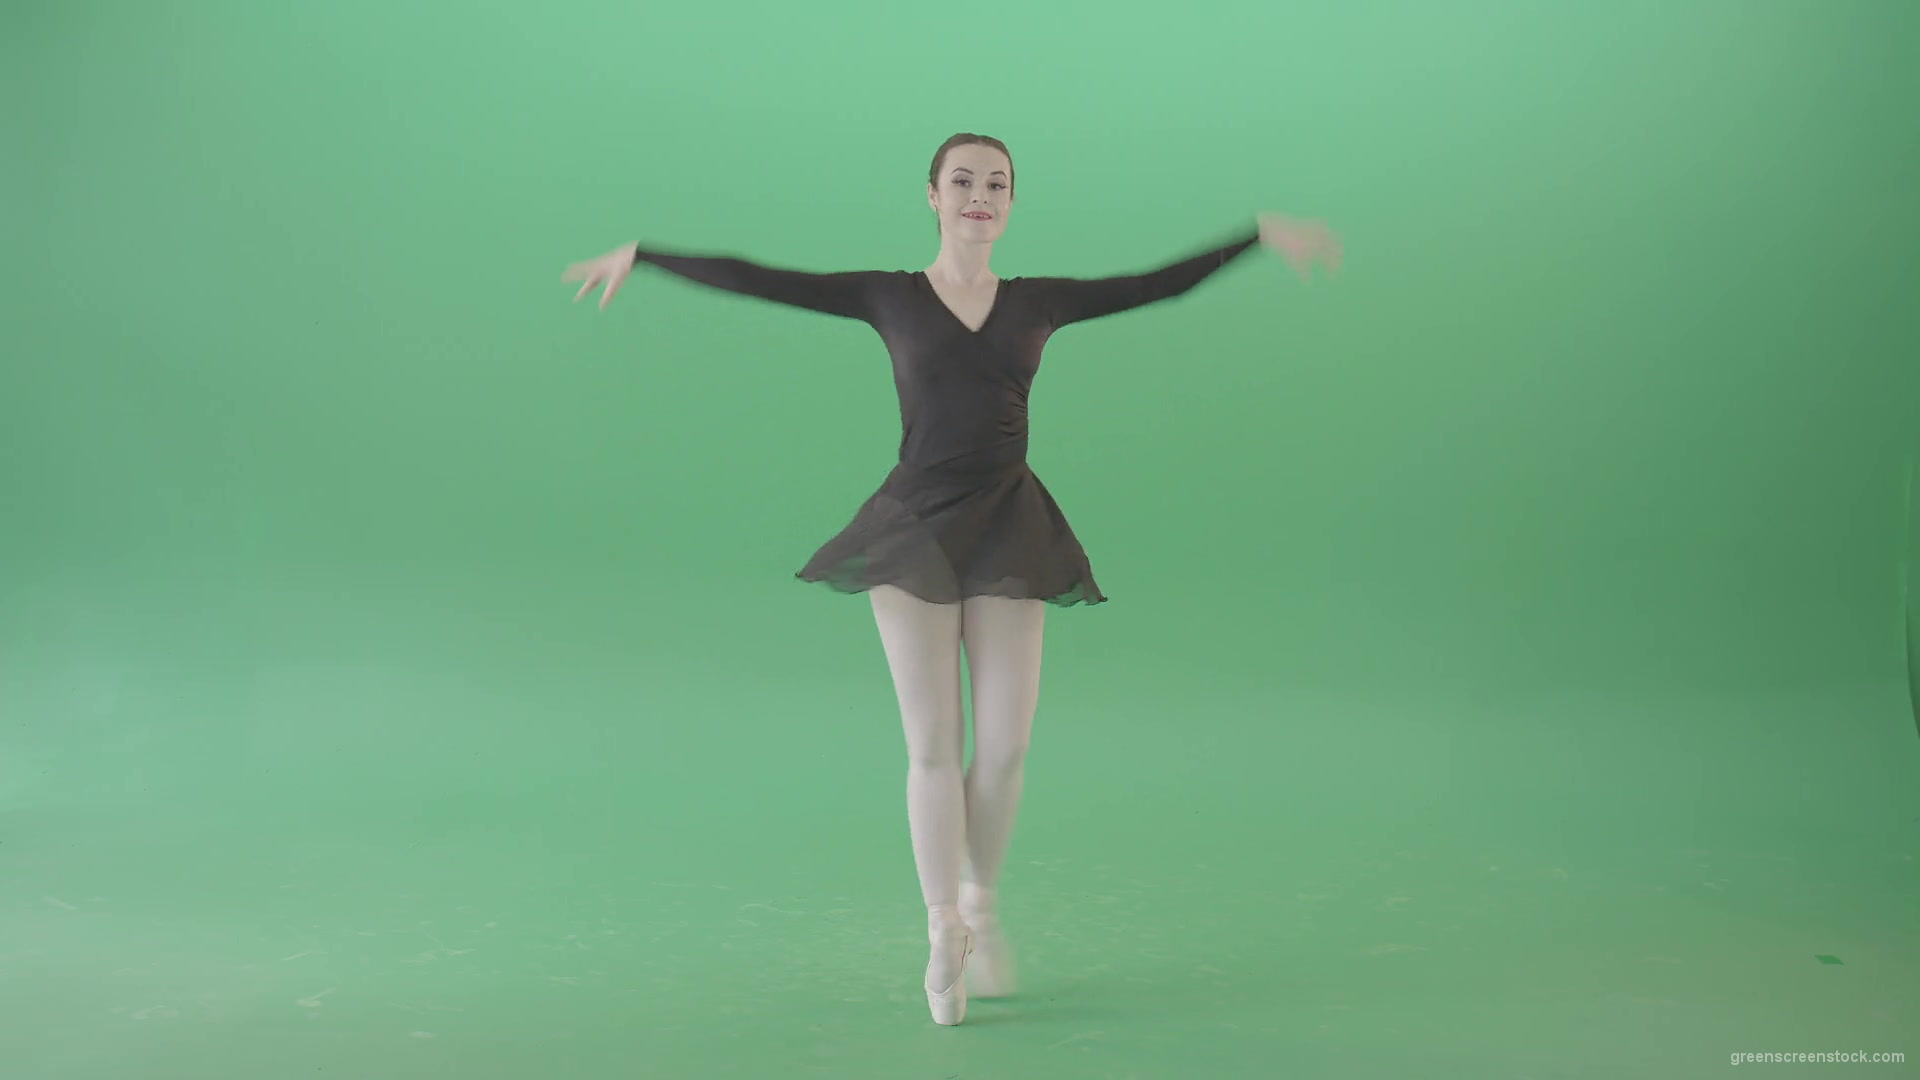 Ballet-Art-Ballerina-girl-spinning-in-dance-on-green-screen-4K-Video-Footage-1920_007 Green Screen Stock